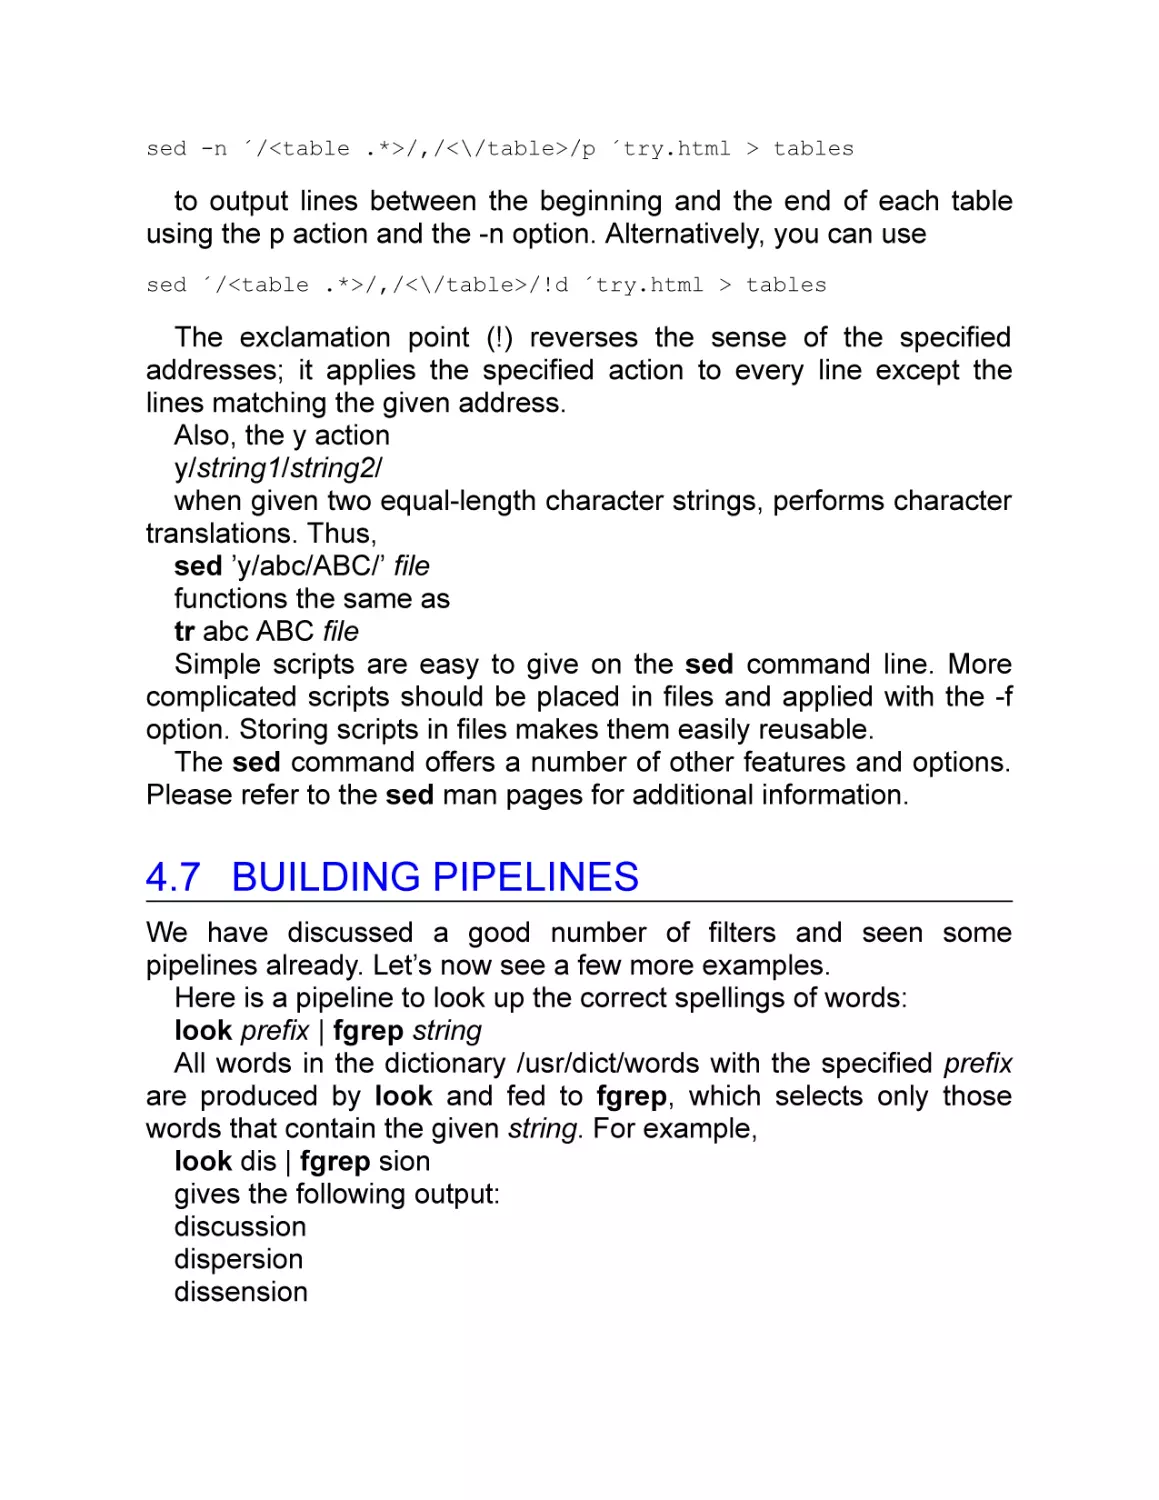 4.7 Building Pipelines